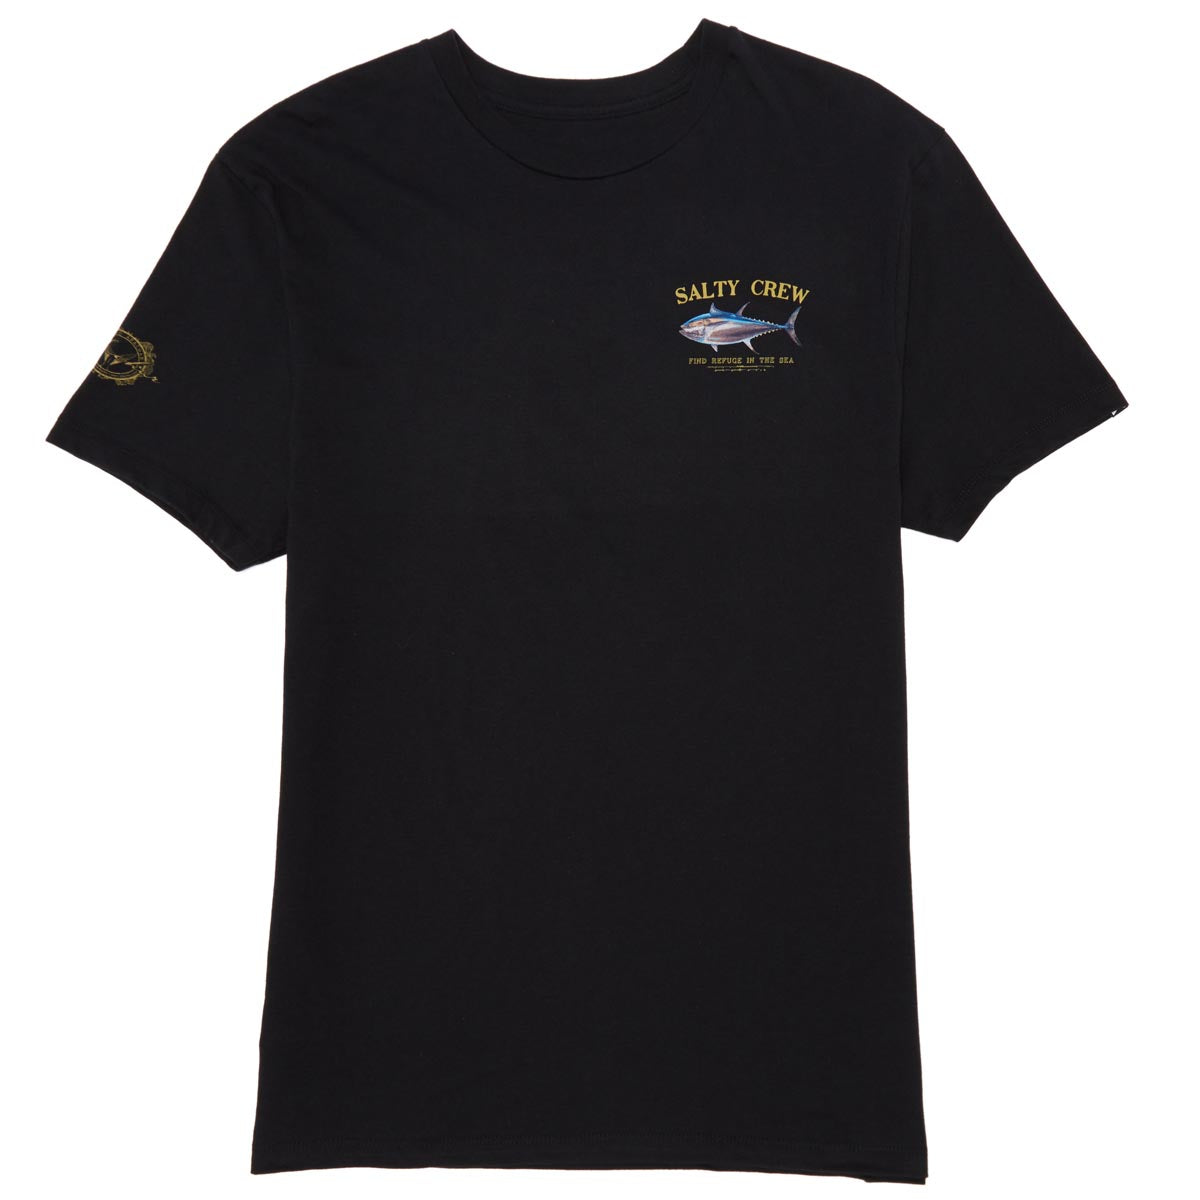 Salty Crew Big Blue T-Shirt - Black image 2